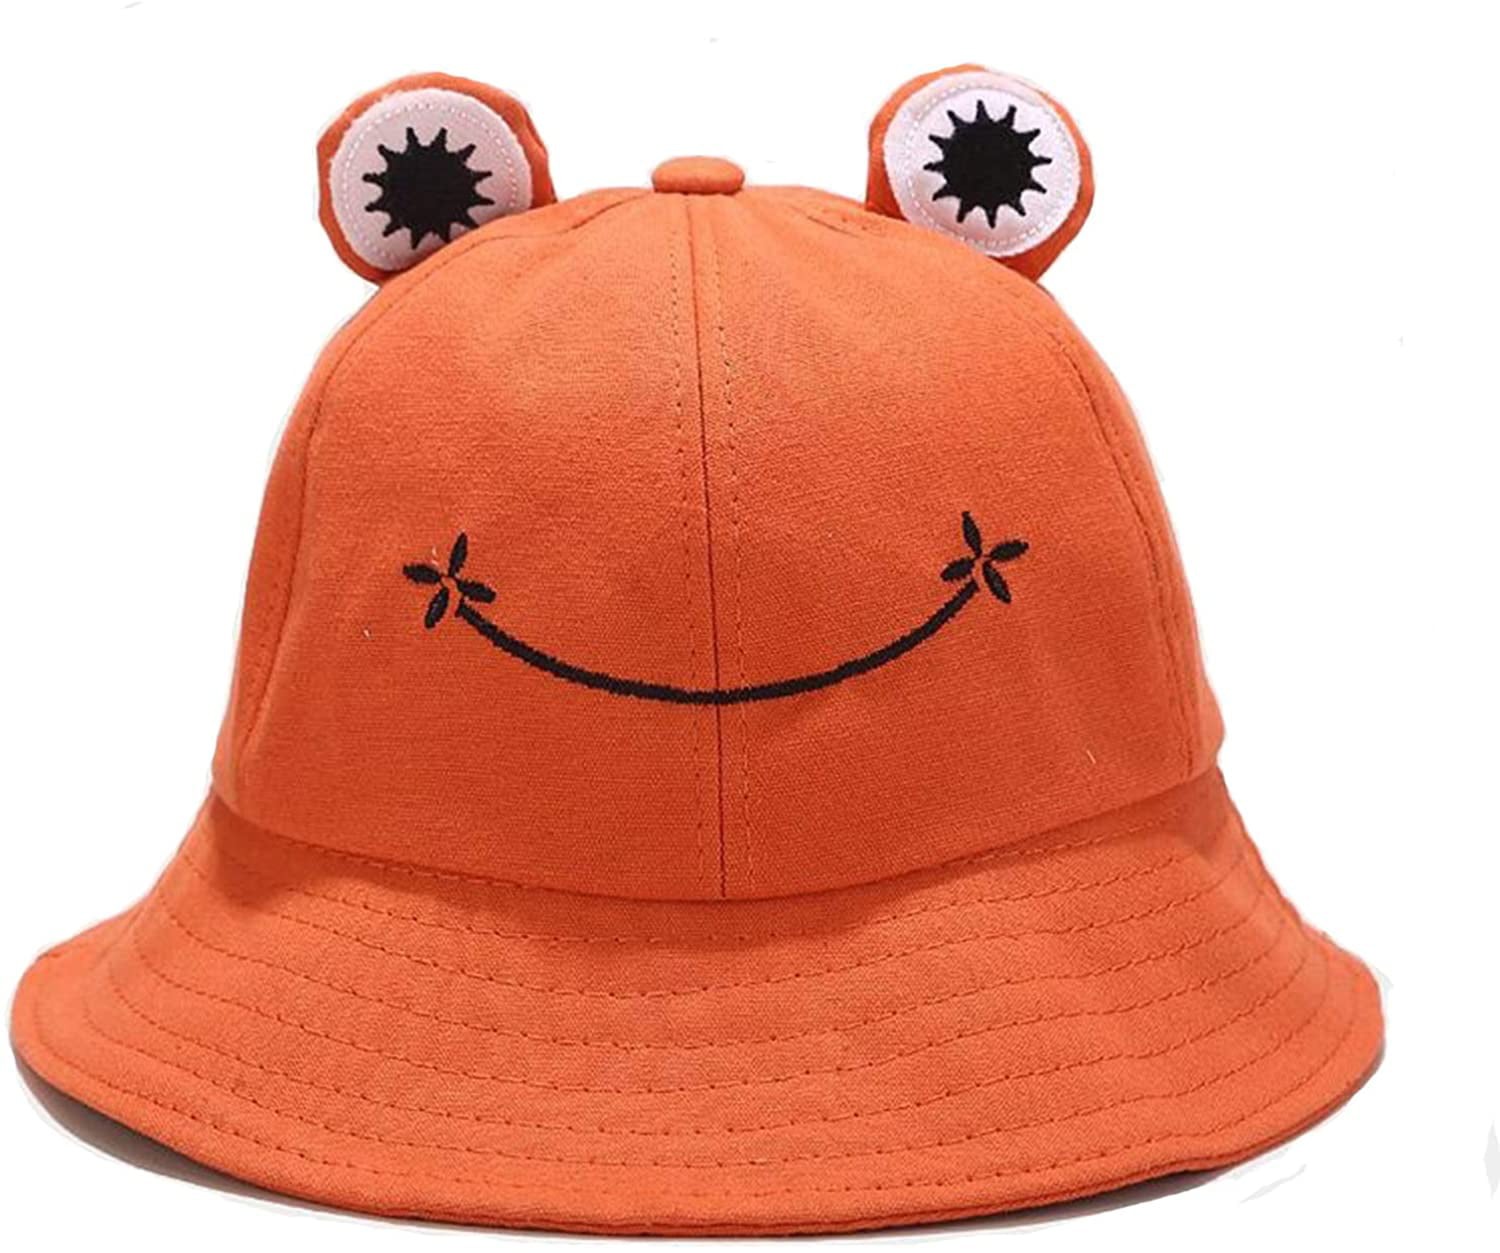 GREFER Adult Cute Frog Bucket Hat,Cotton Sun Hats for Women&Men Wide Brim Fisherman Hat Beach Summer Hat Cowboy Hat 